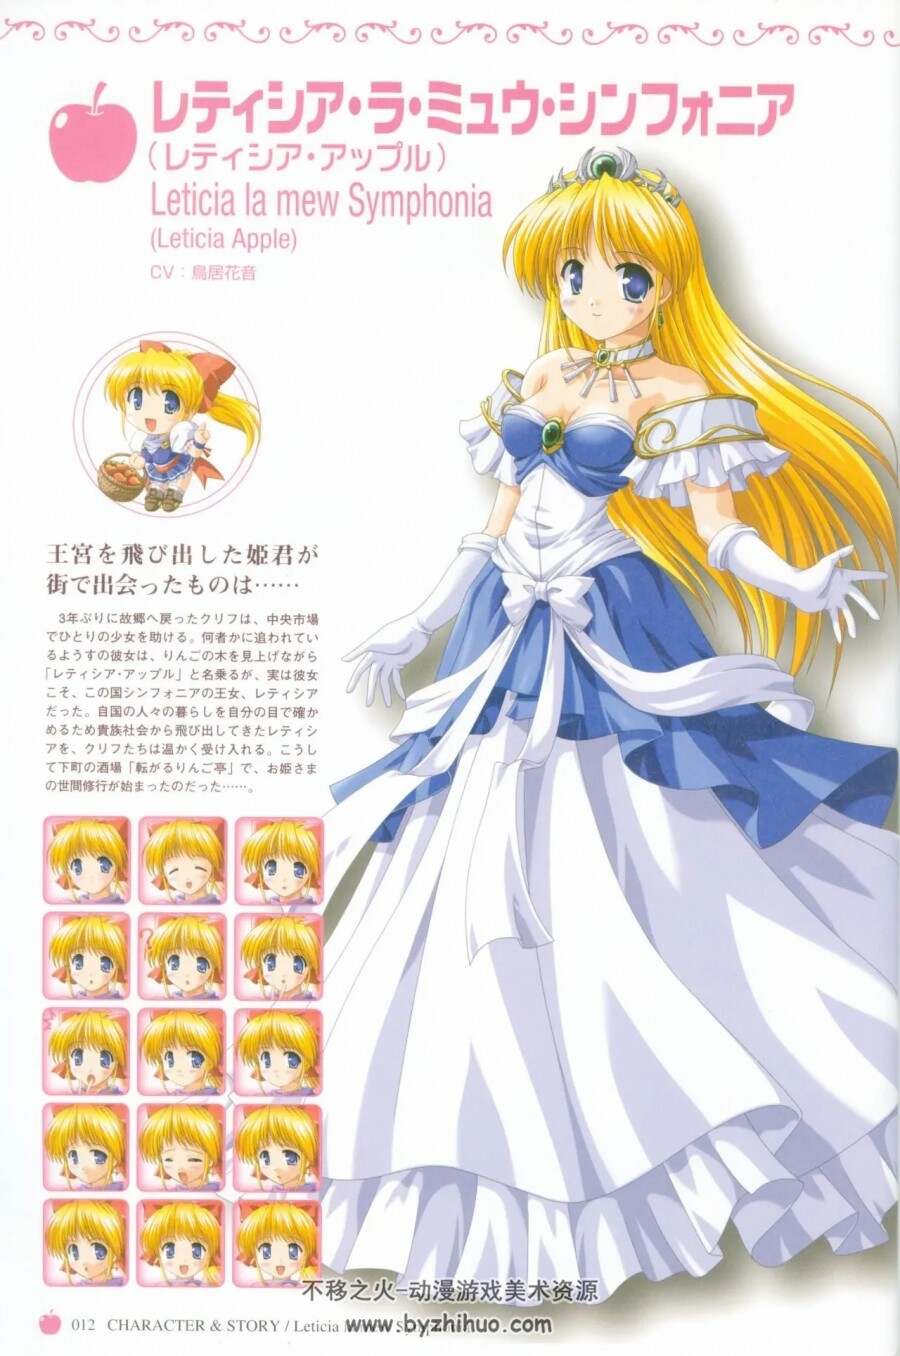 公主假日设定集 Princess Holiday Visual FanBook 百度网盘下载